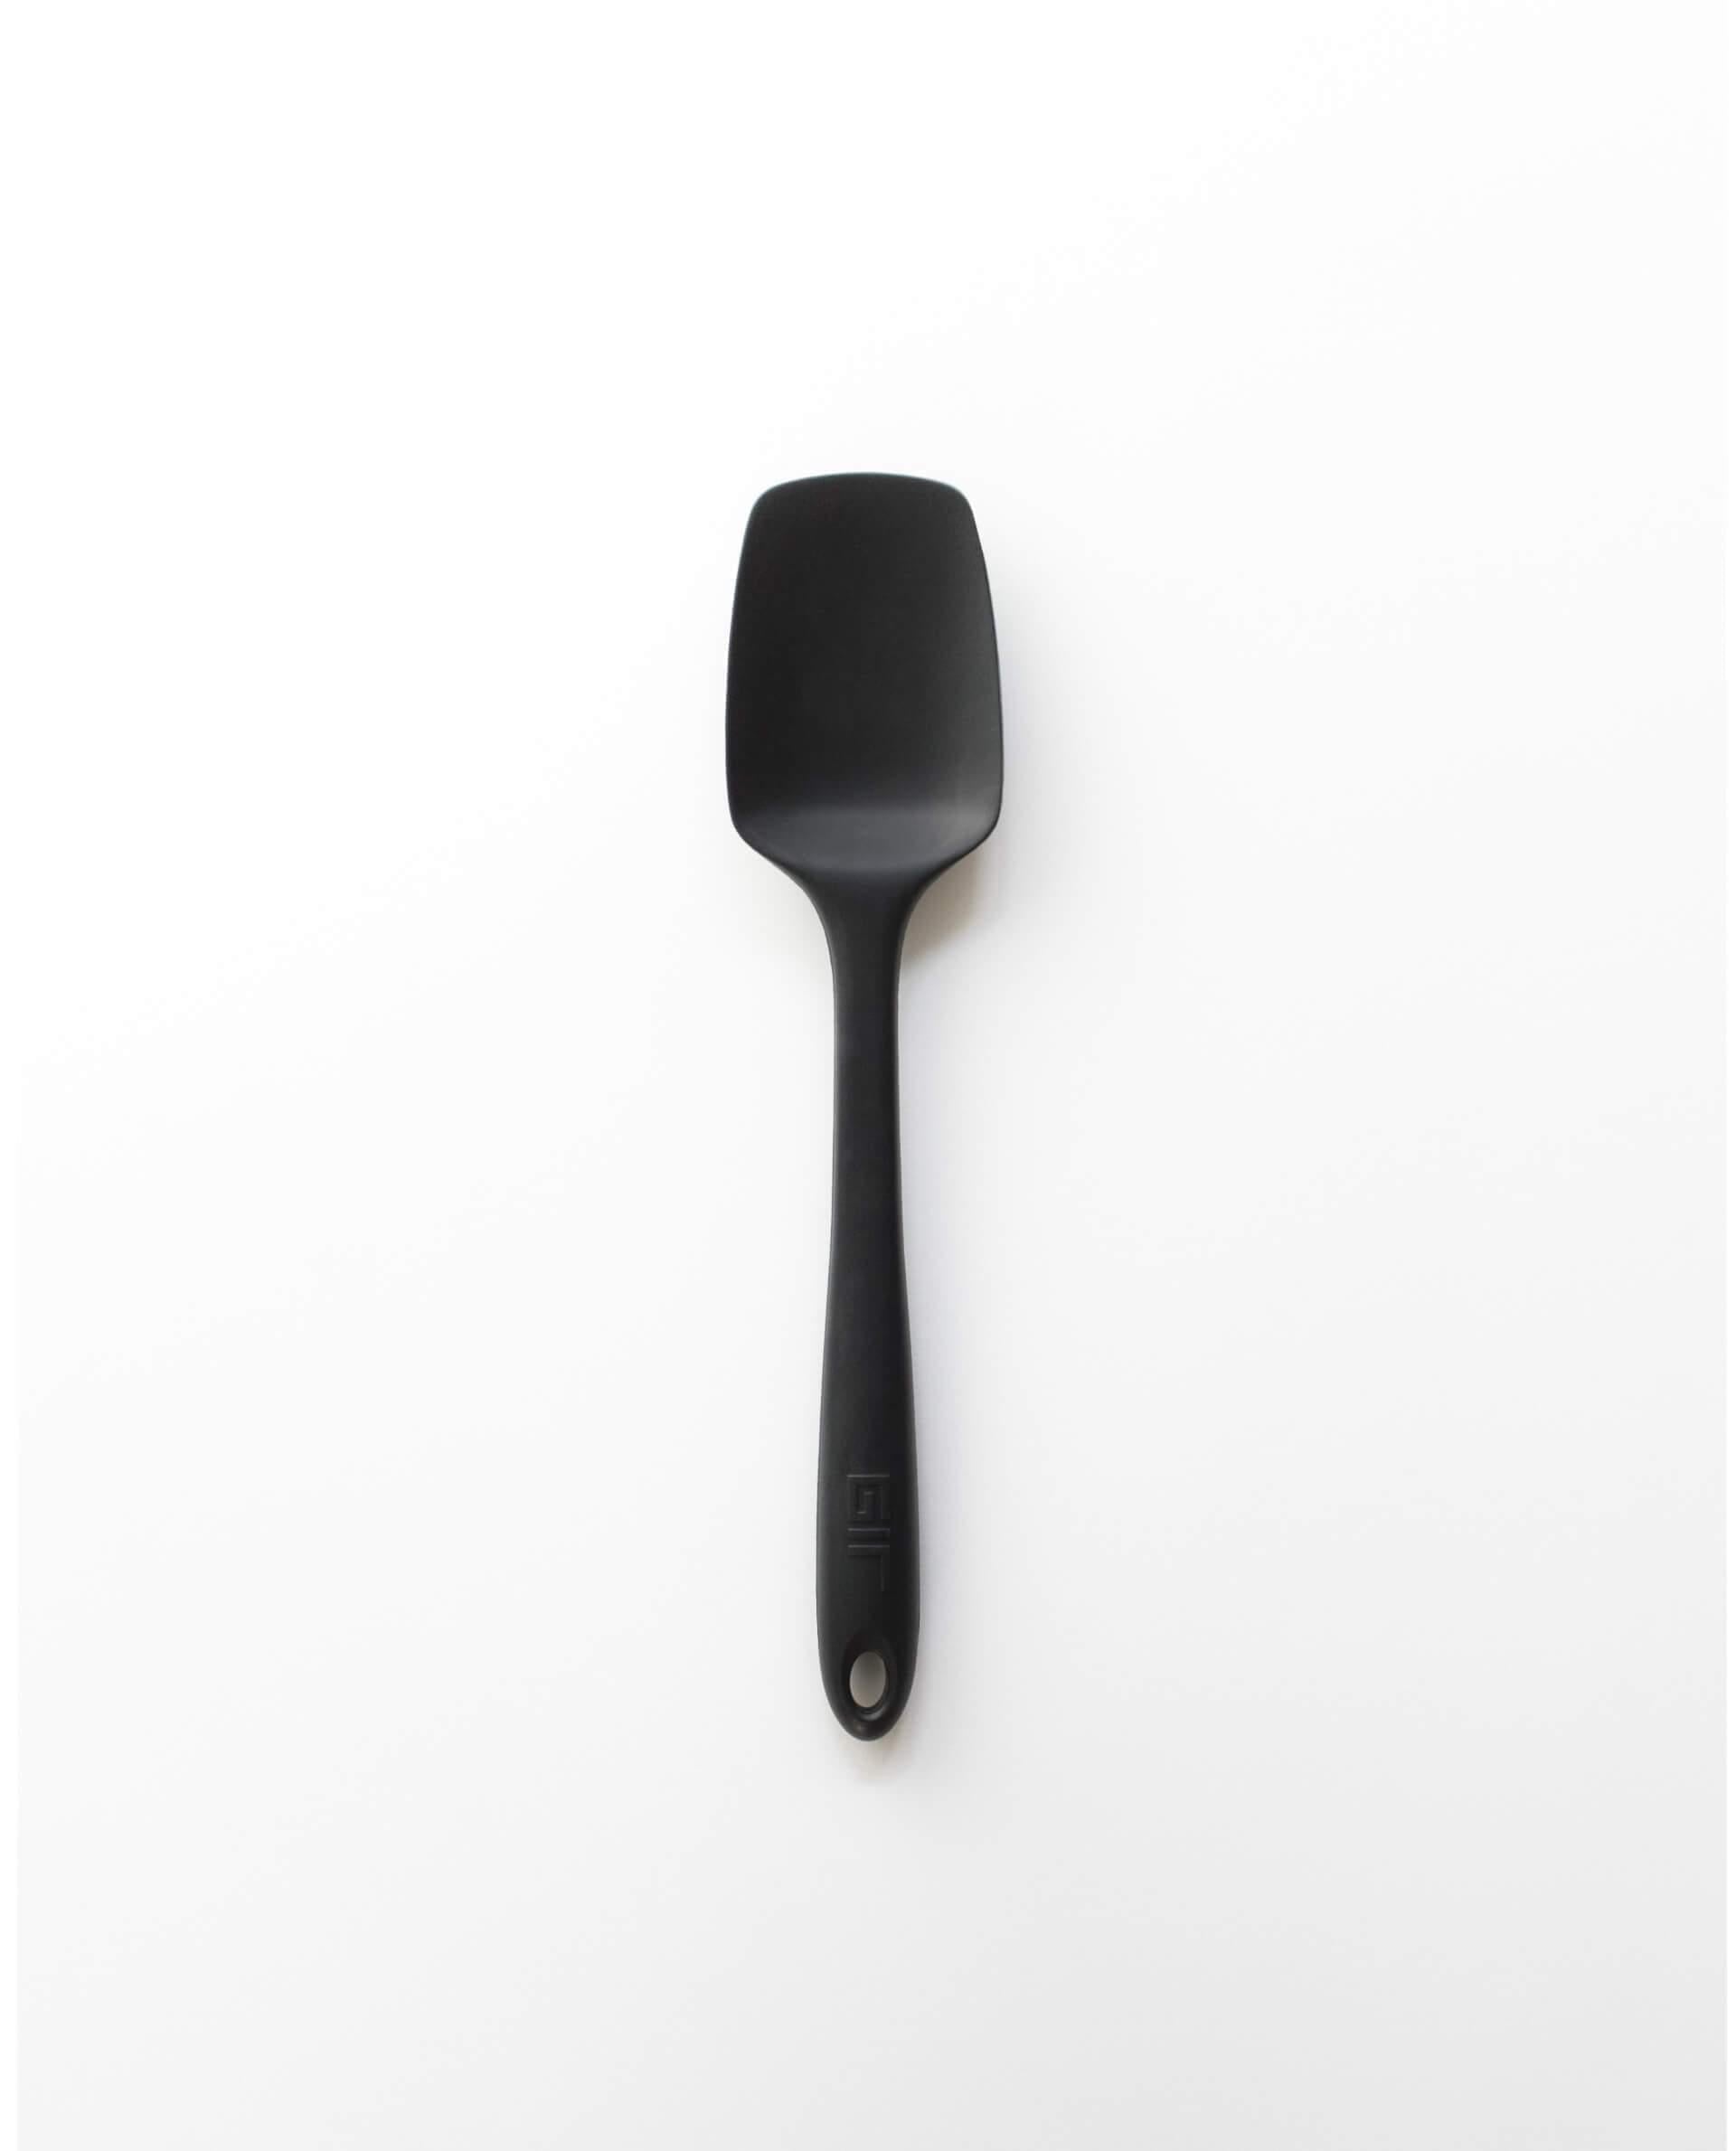 GIR Skinny Spoonula-Accessories-GIR-Black-Carbon Knife Co